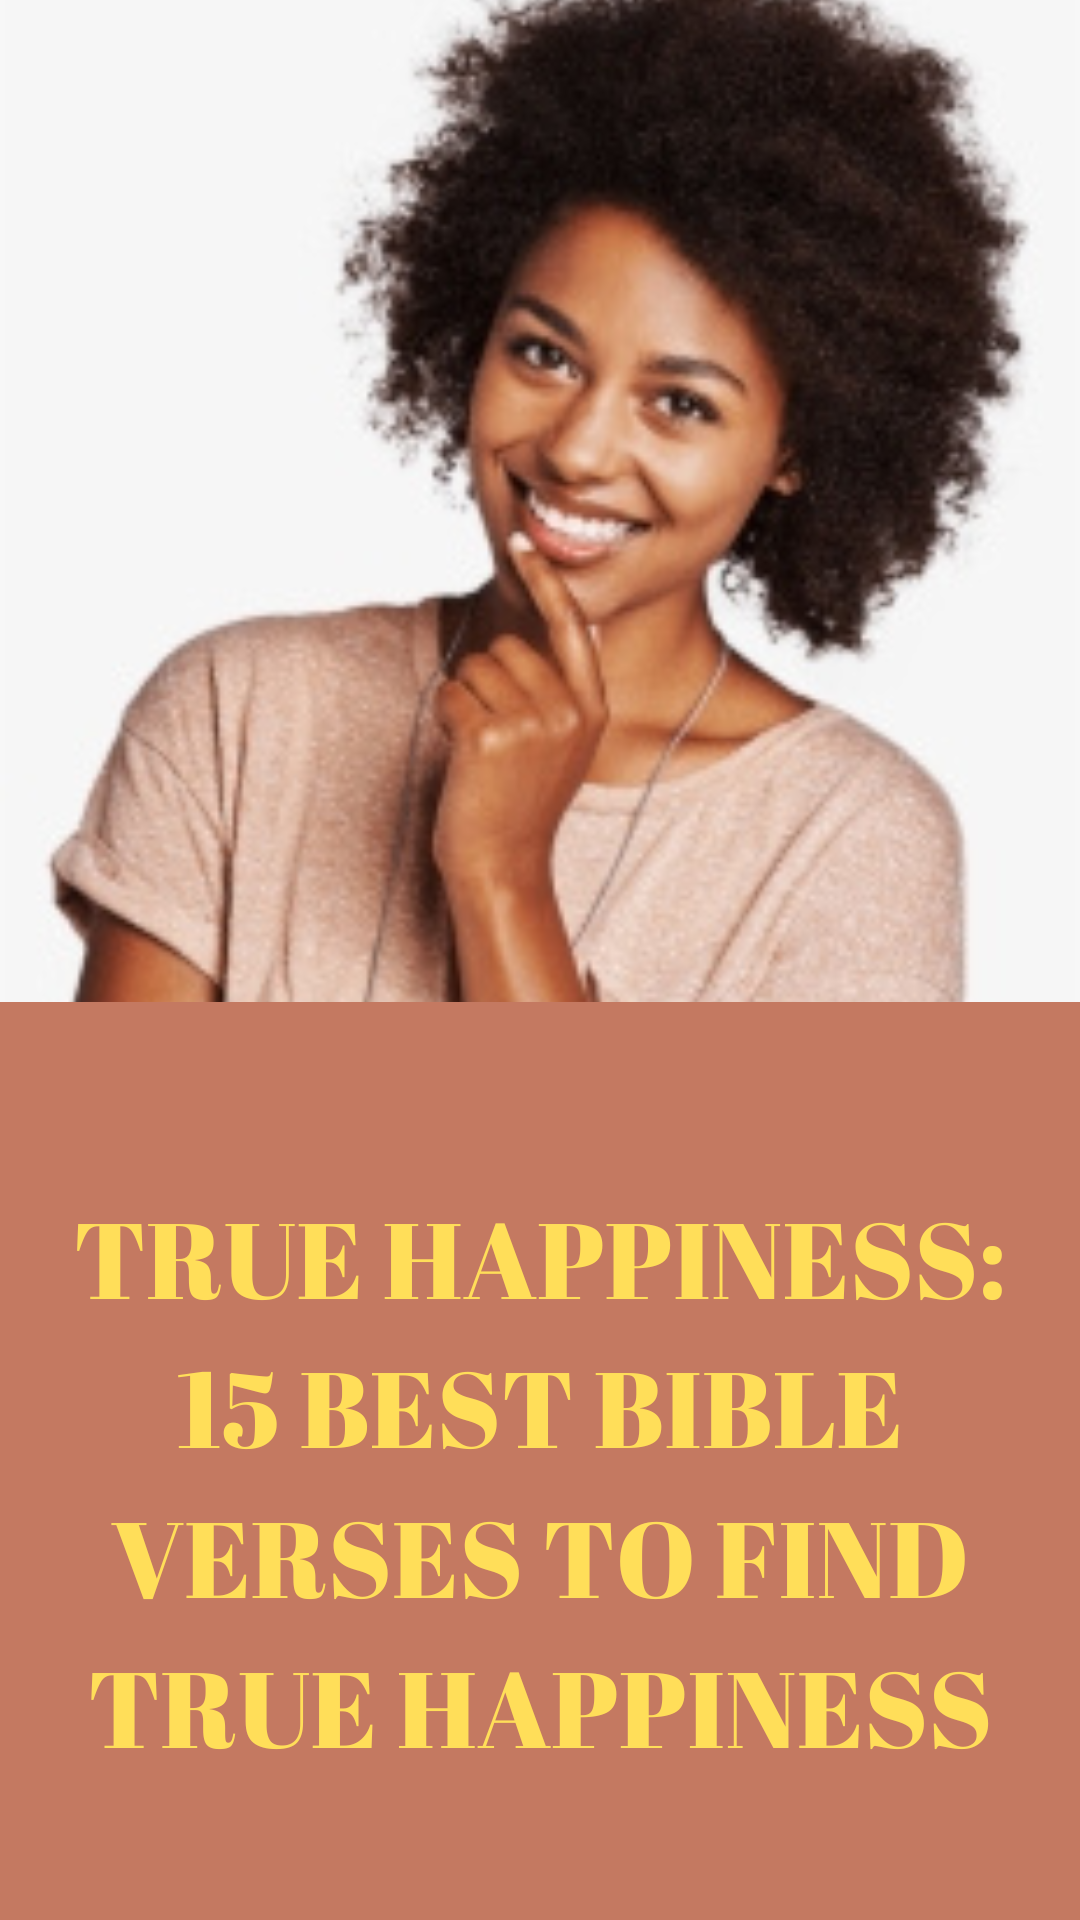 15 best bible verses to find true happiness